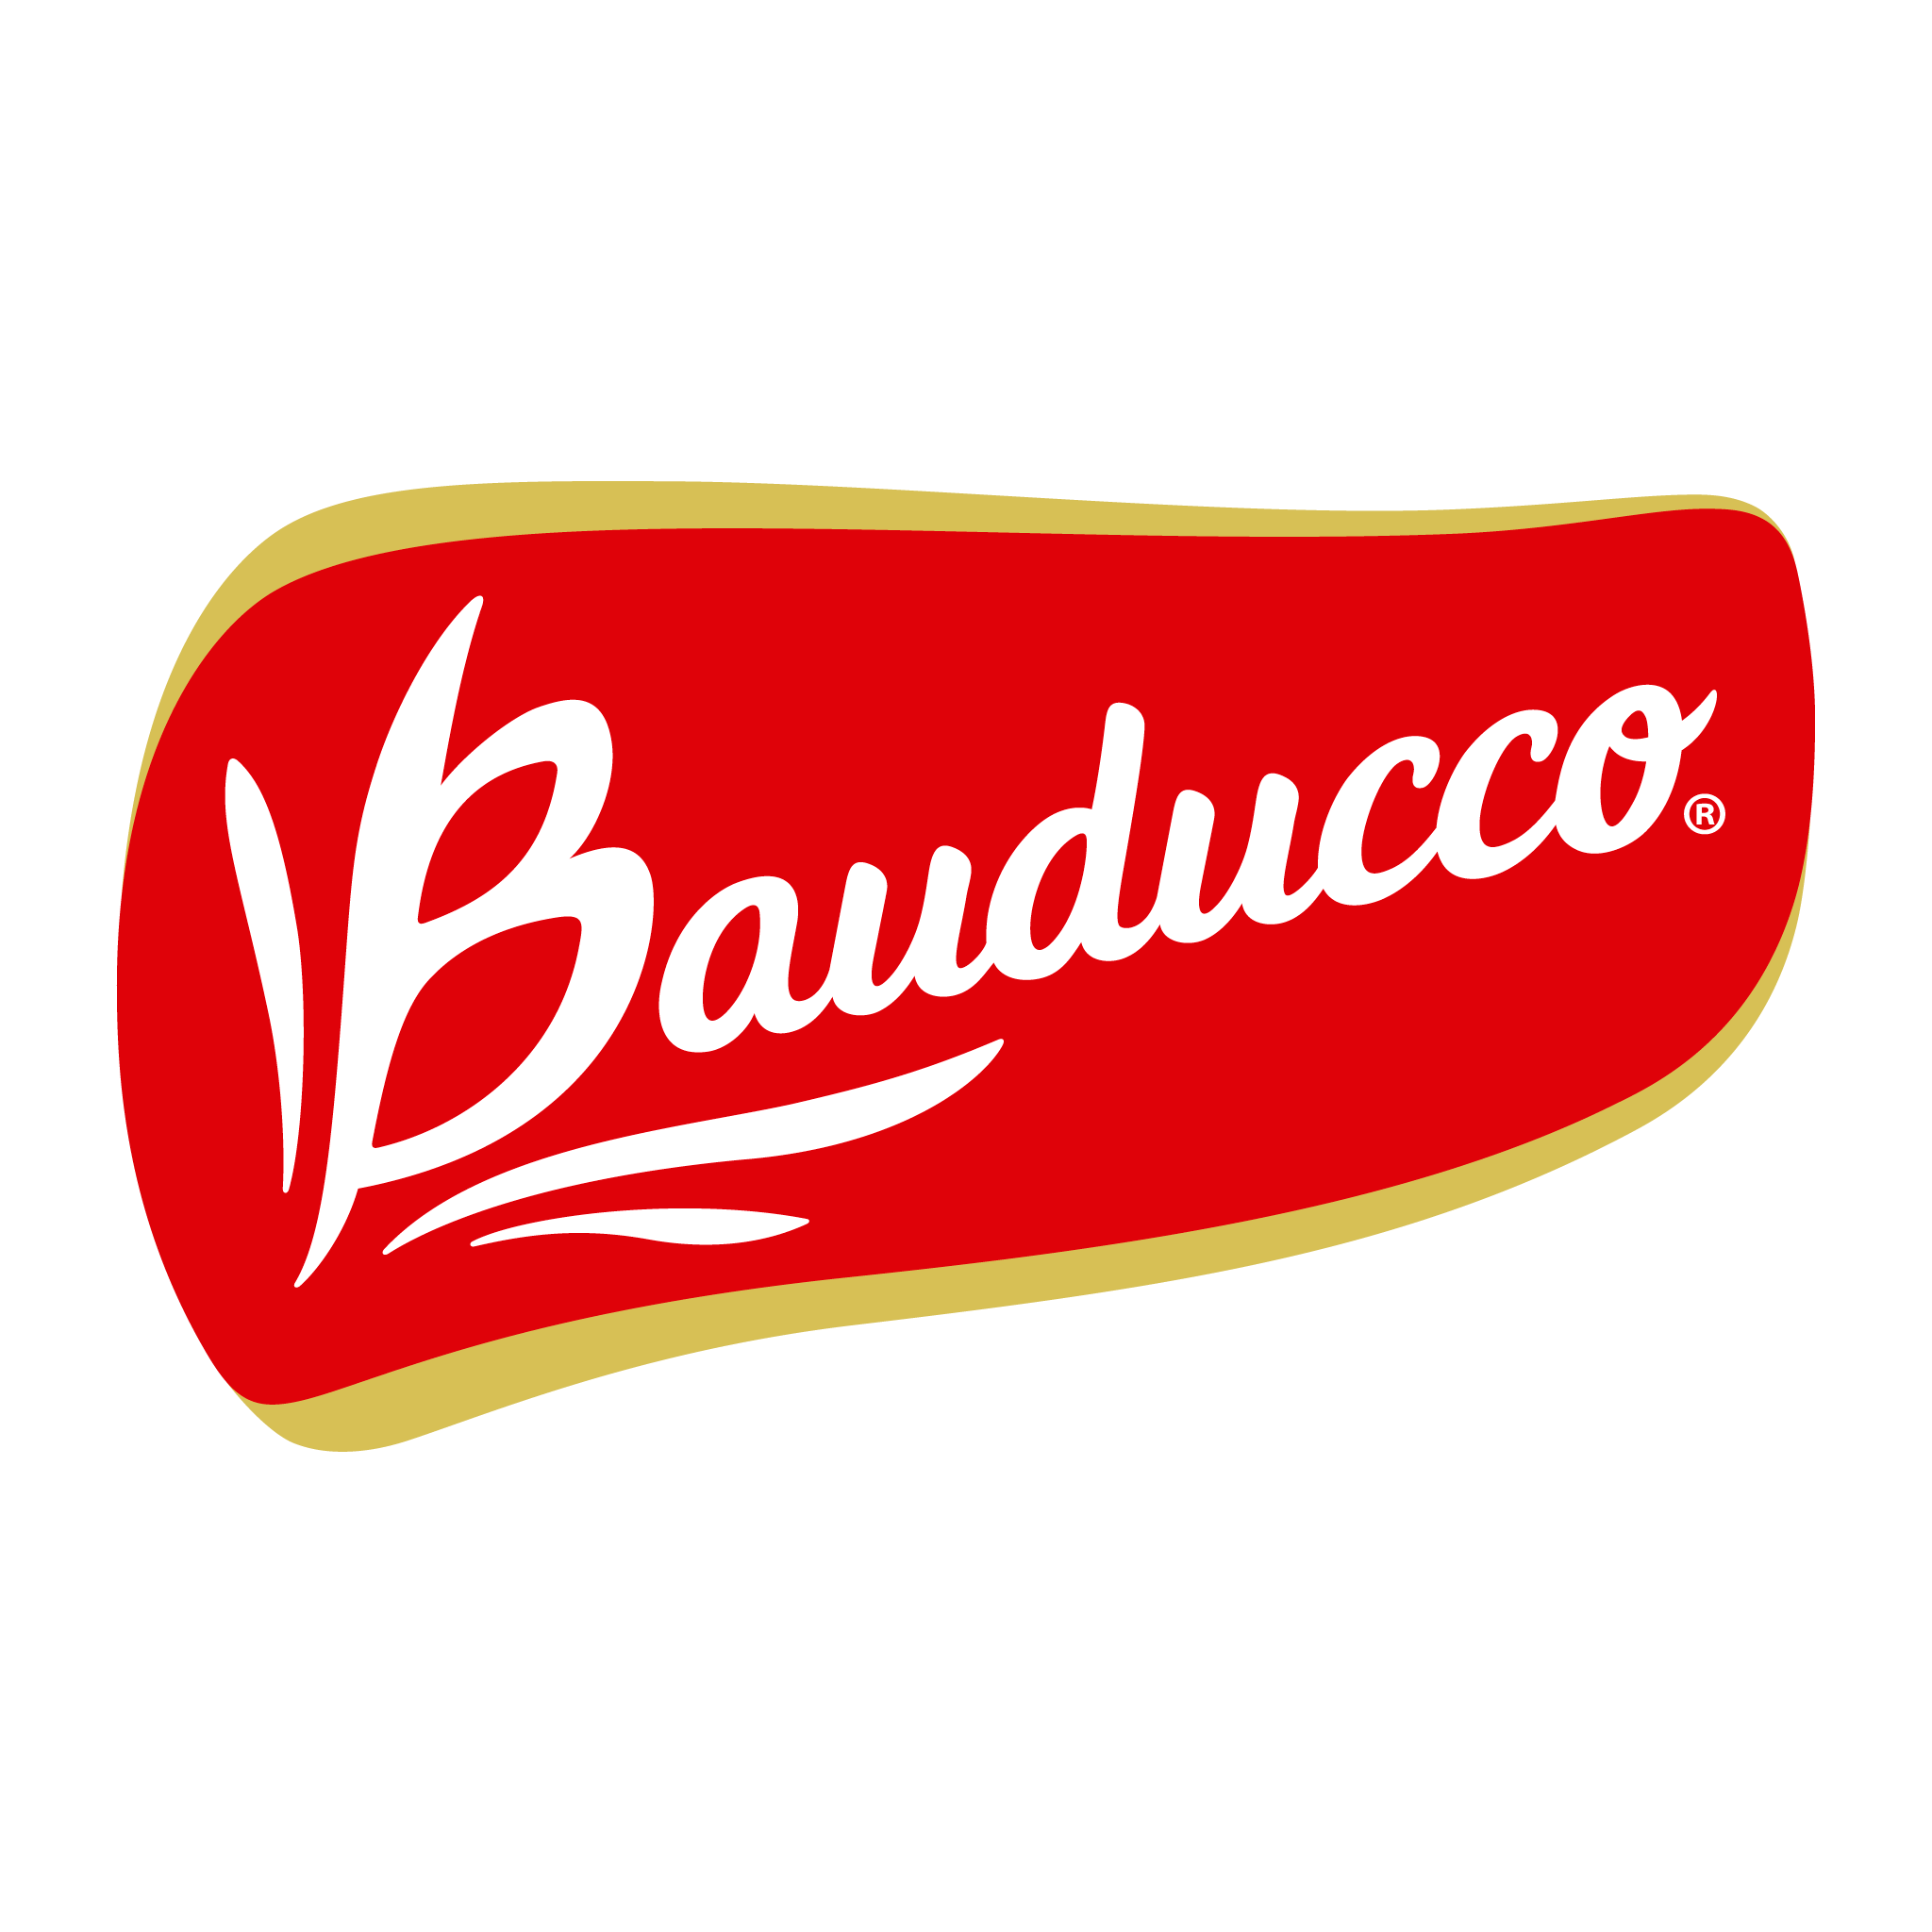 Bauducco.png